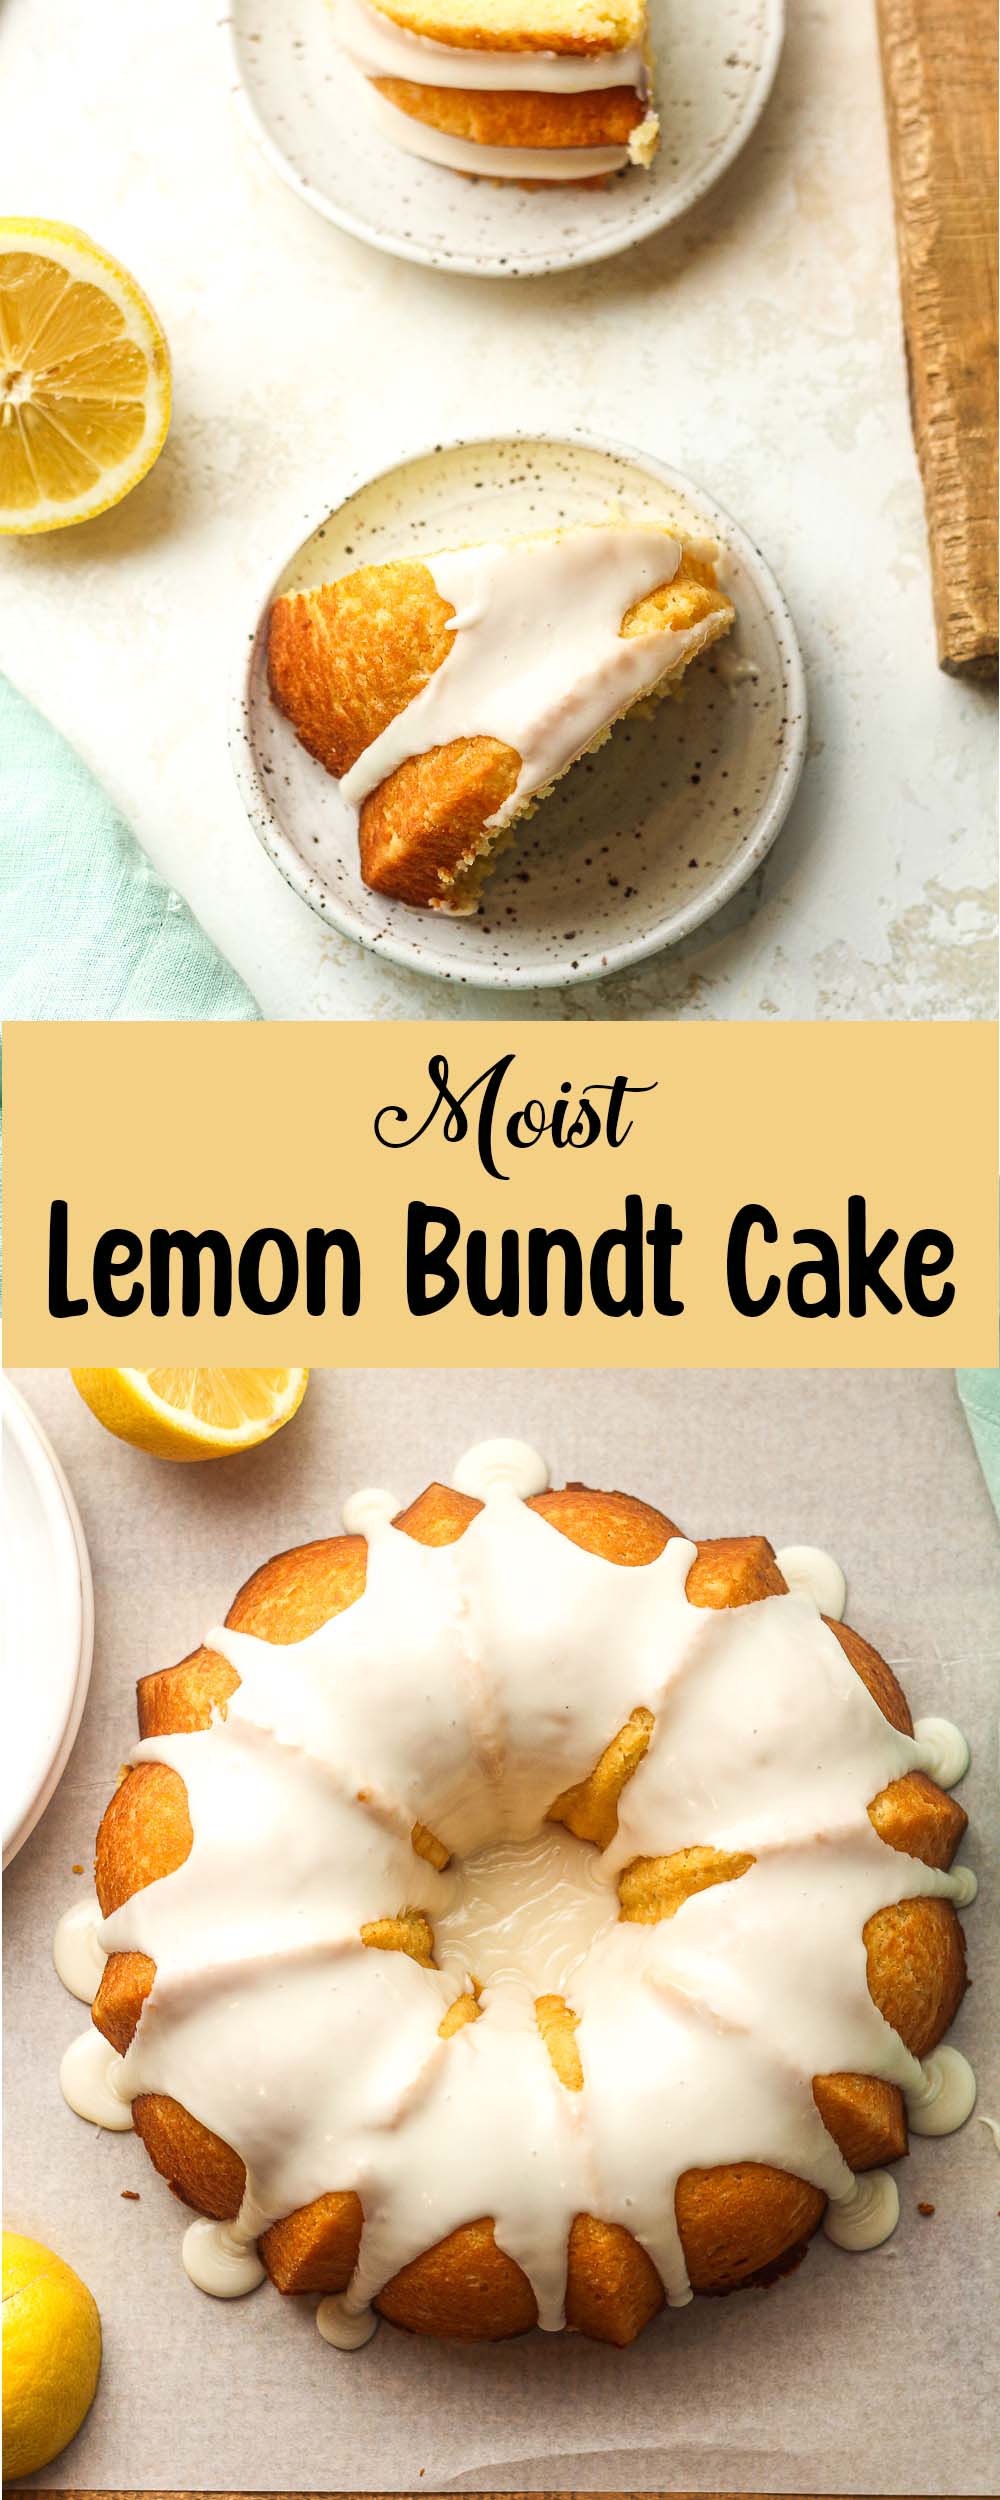 A collage of moist lemon bundt cakes.